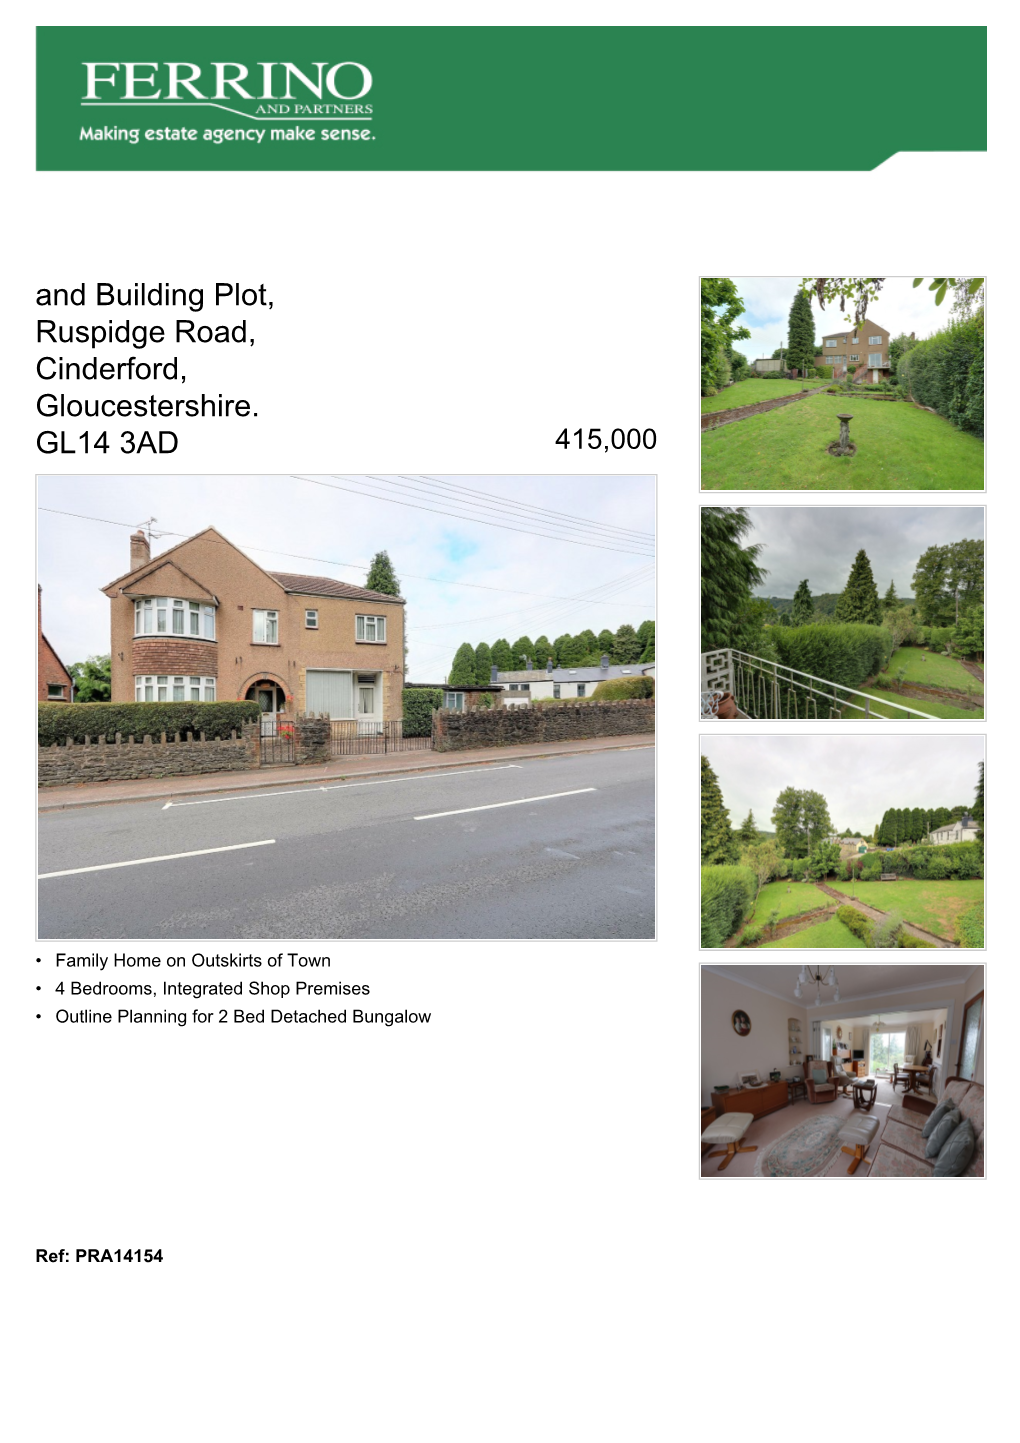 And Building Plot, Ruspidge Road, Cinderford, Gloucestershire. GL14 3AD 415,000